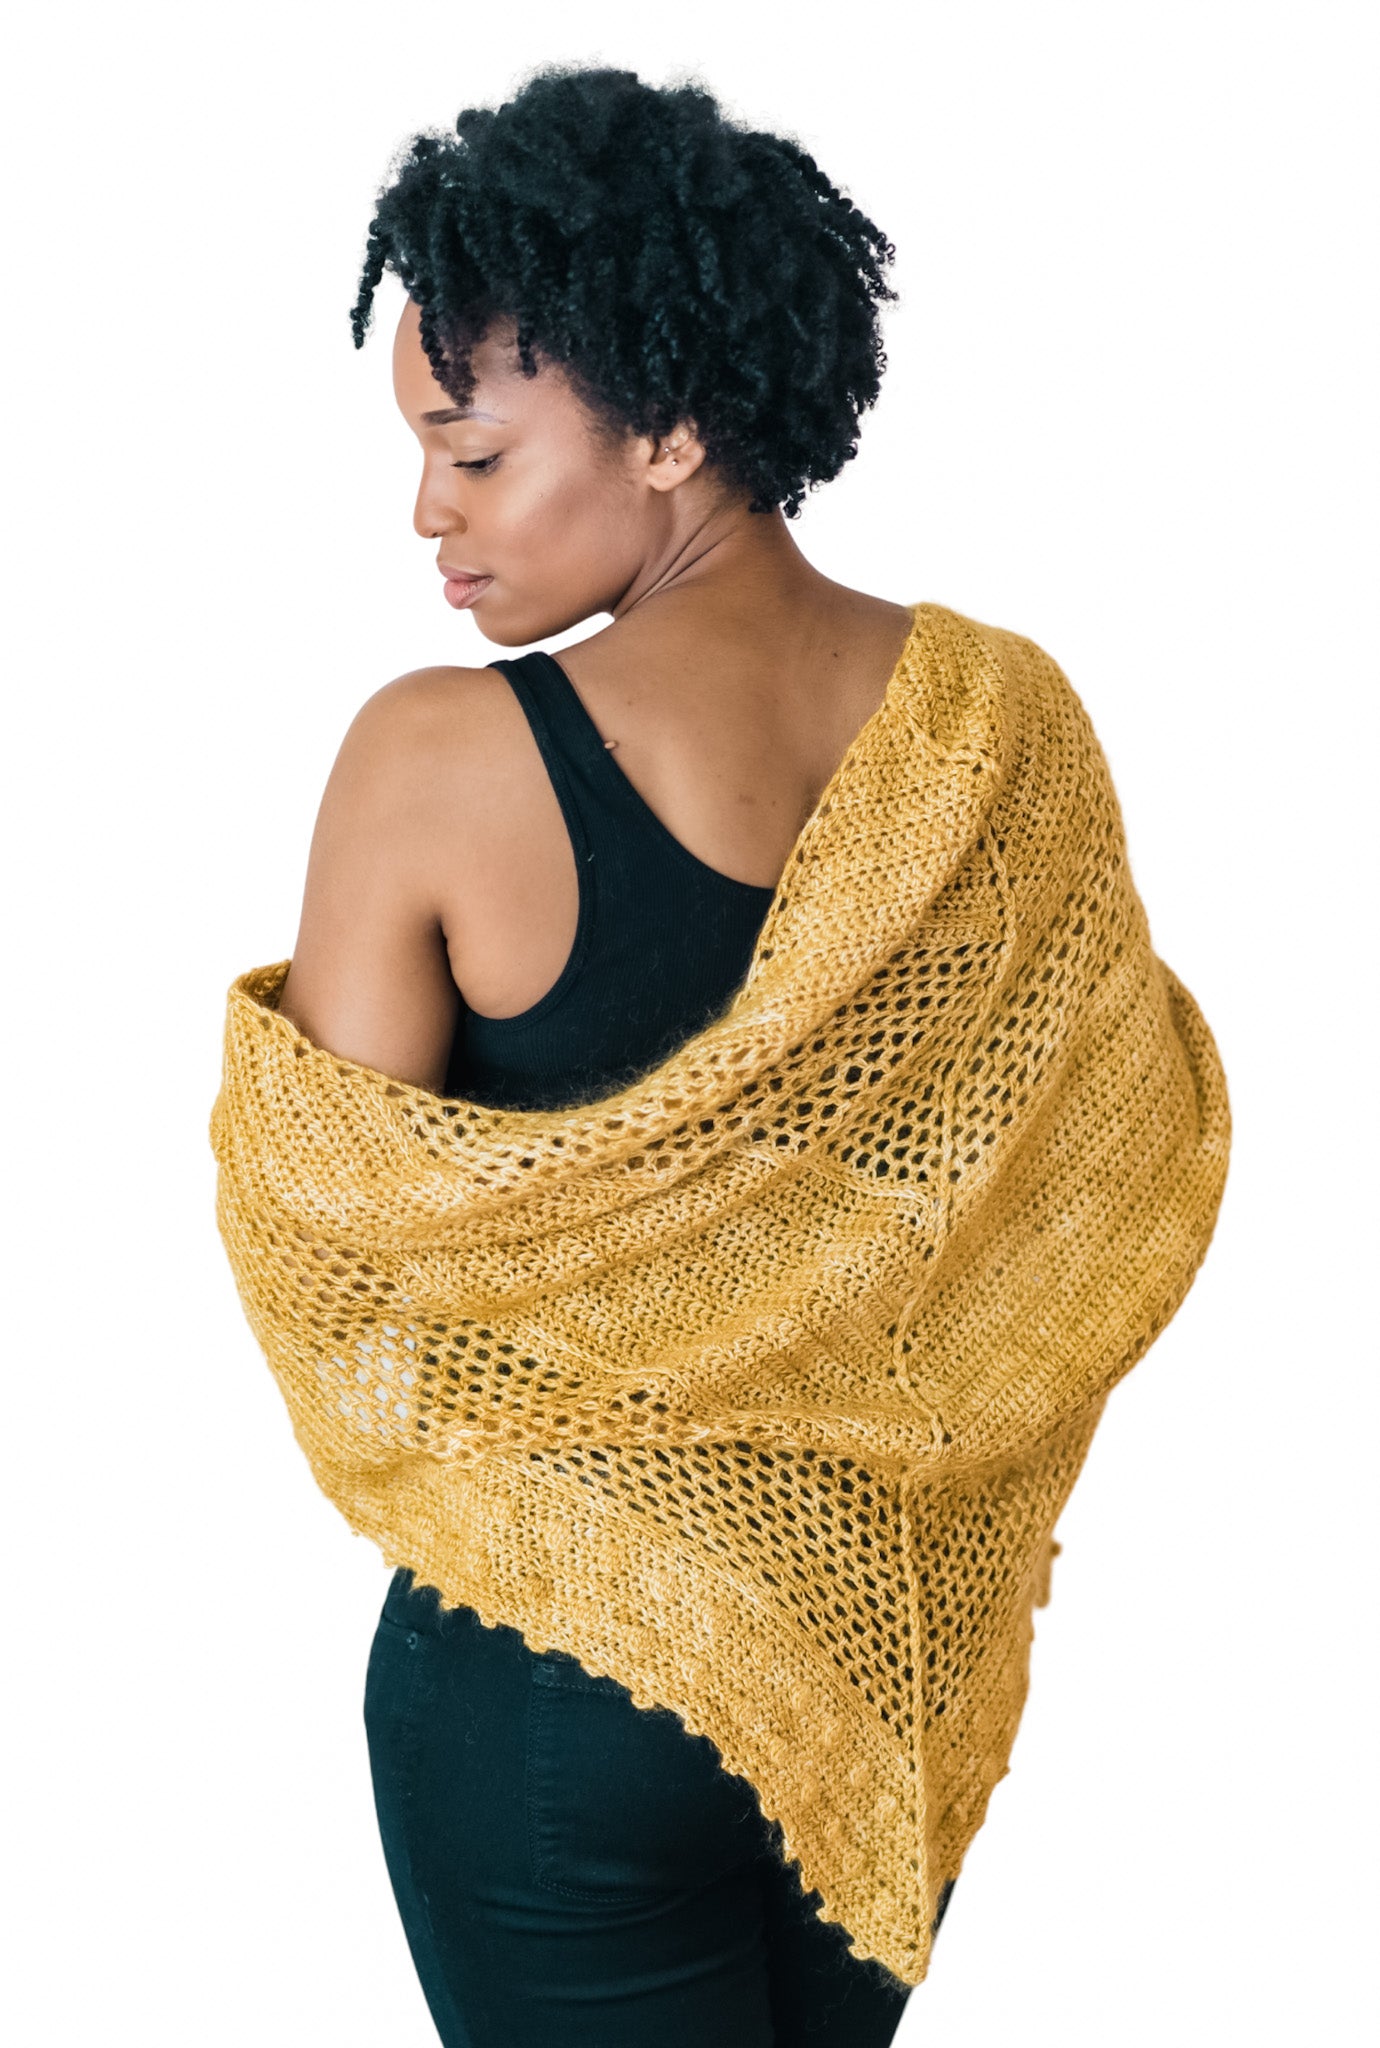 Wildbird Shawl // Crochet PDF Pattern